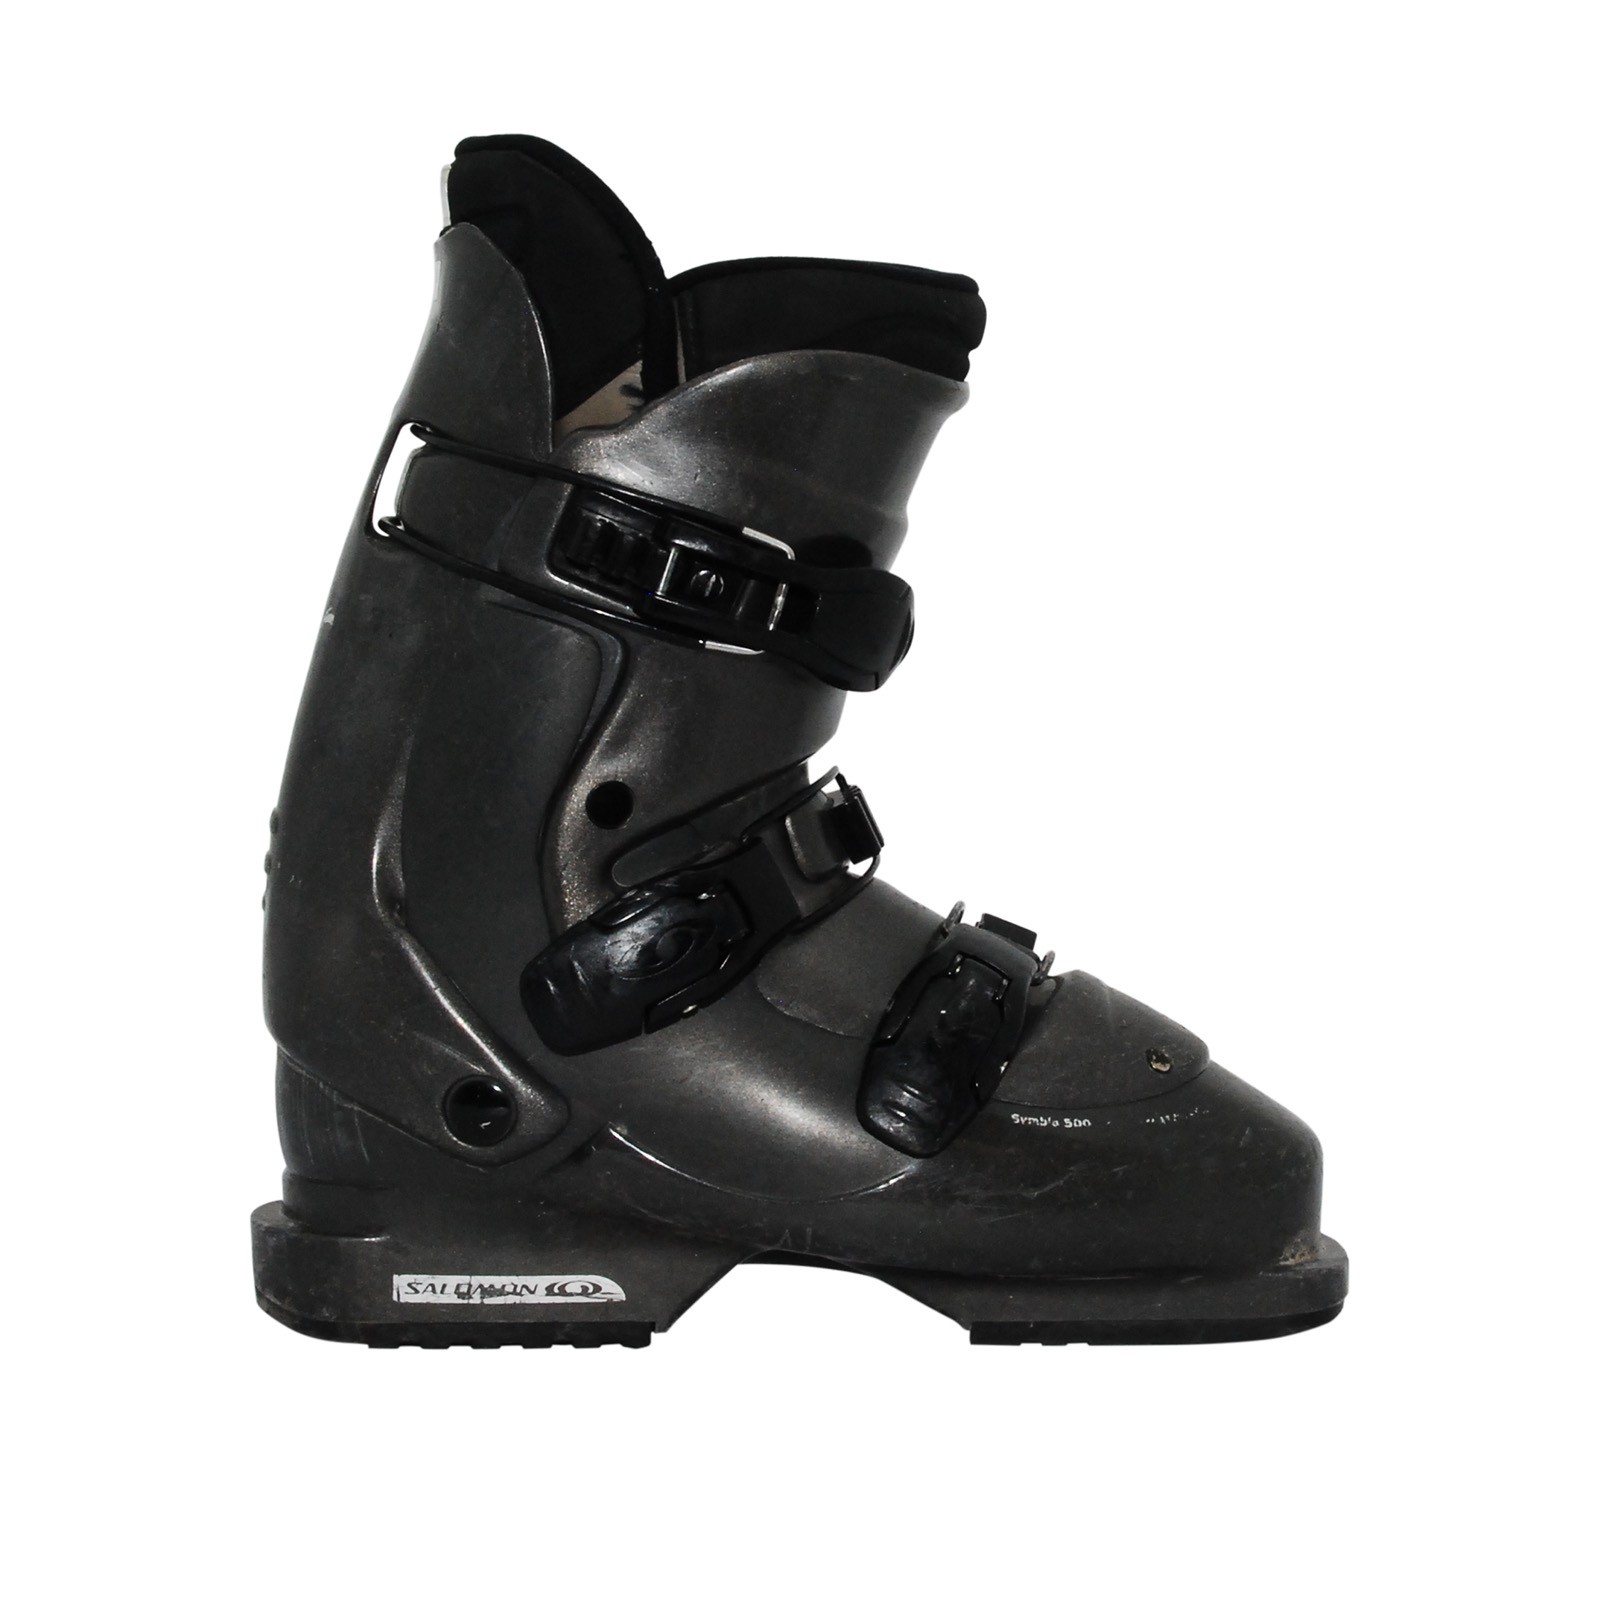 Mobilisere bule Som Ski boots Salomon Symbio 500